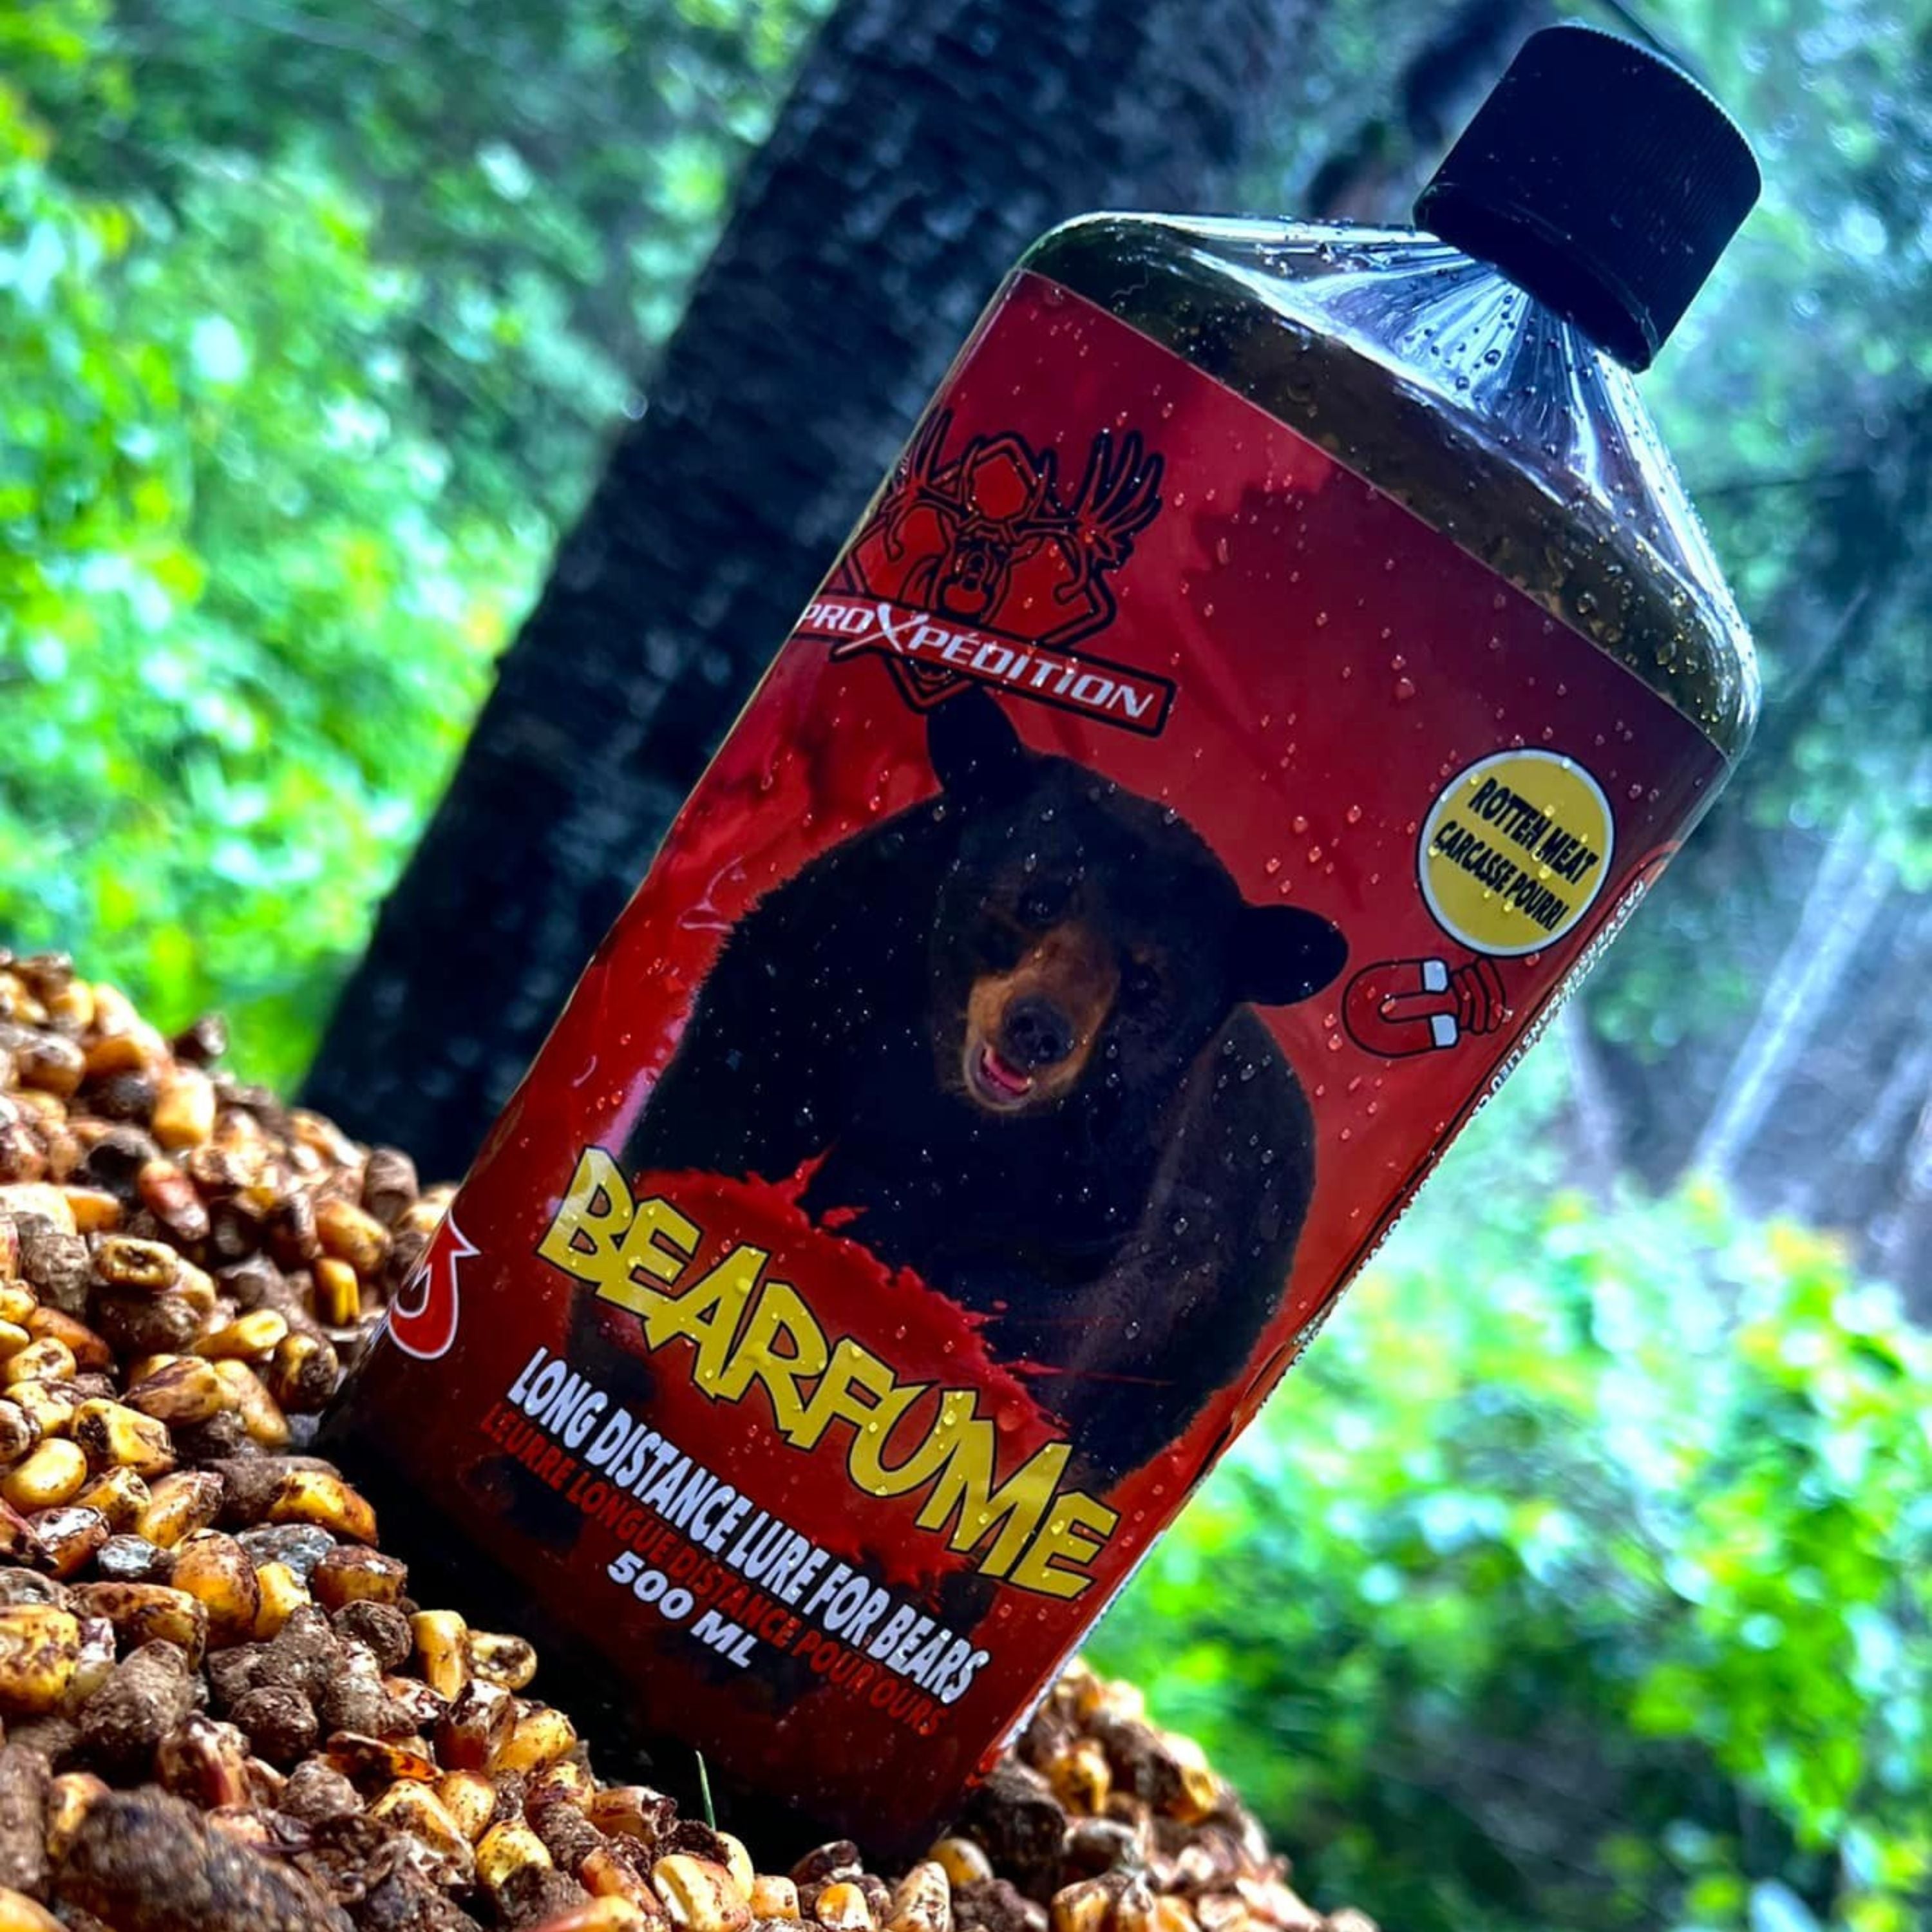 Bearfume and liquid smoke bear scent combo